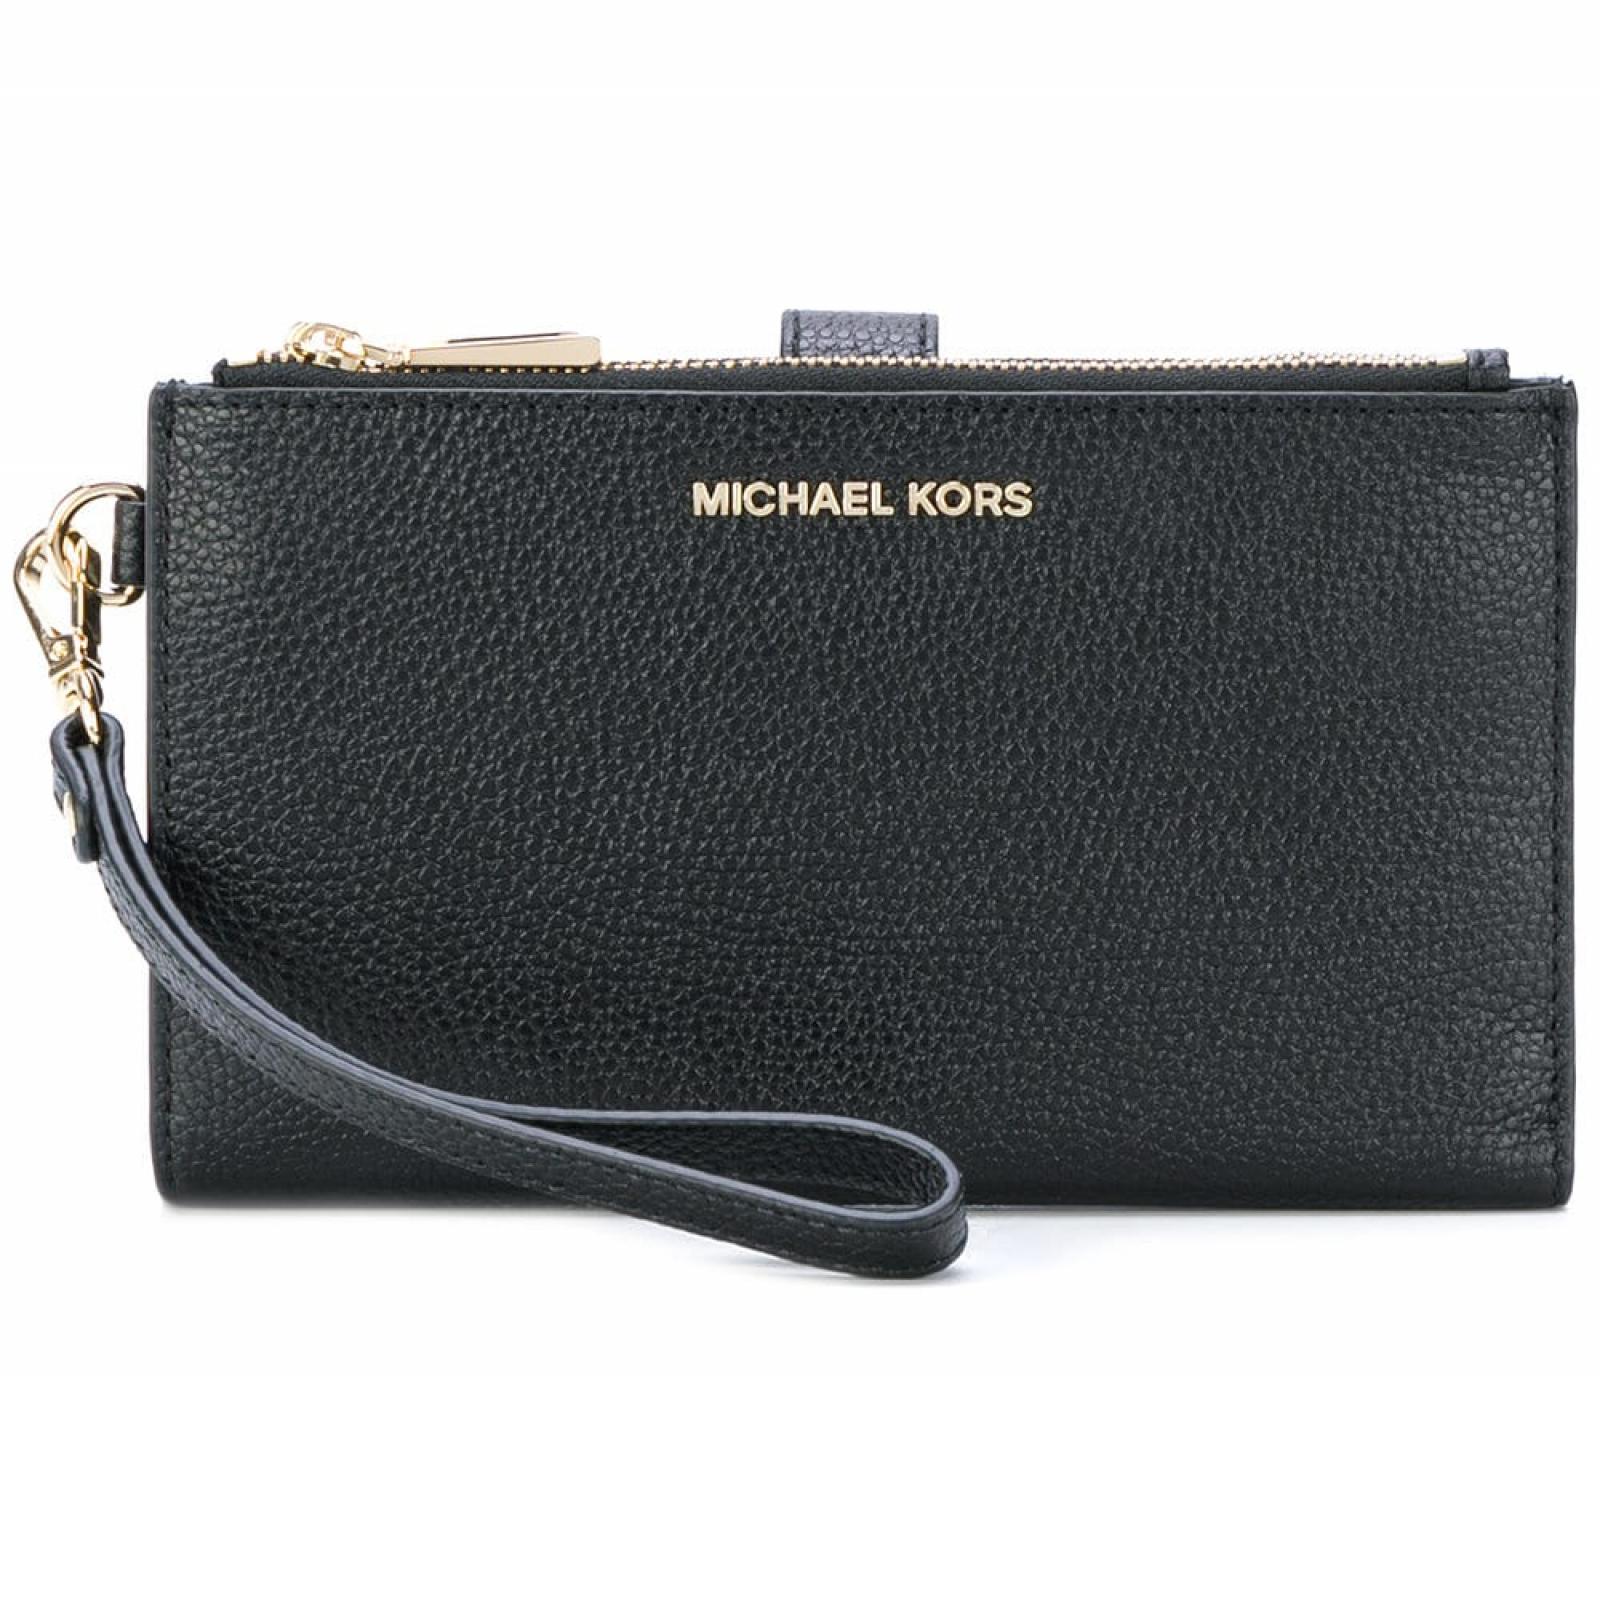 Michael Kors Double Zip Adele Wallet with phone holder - 1